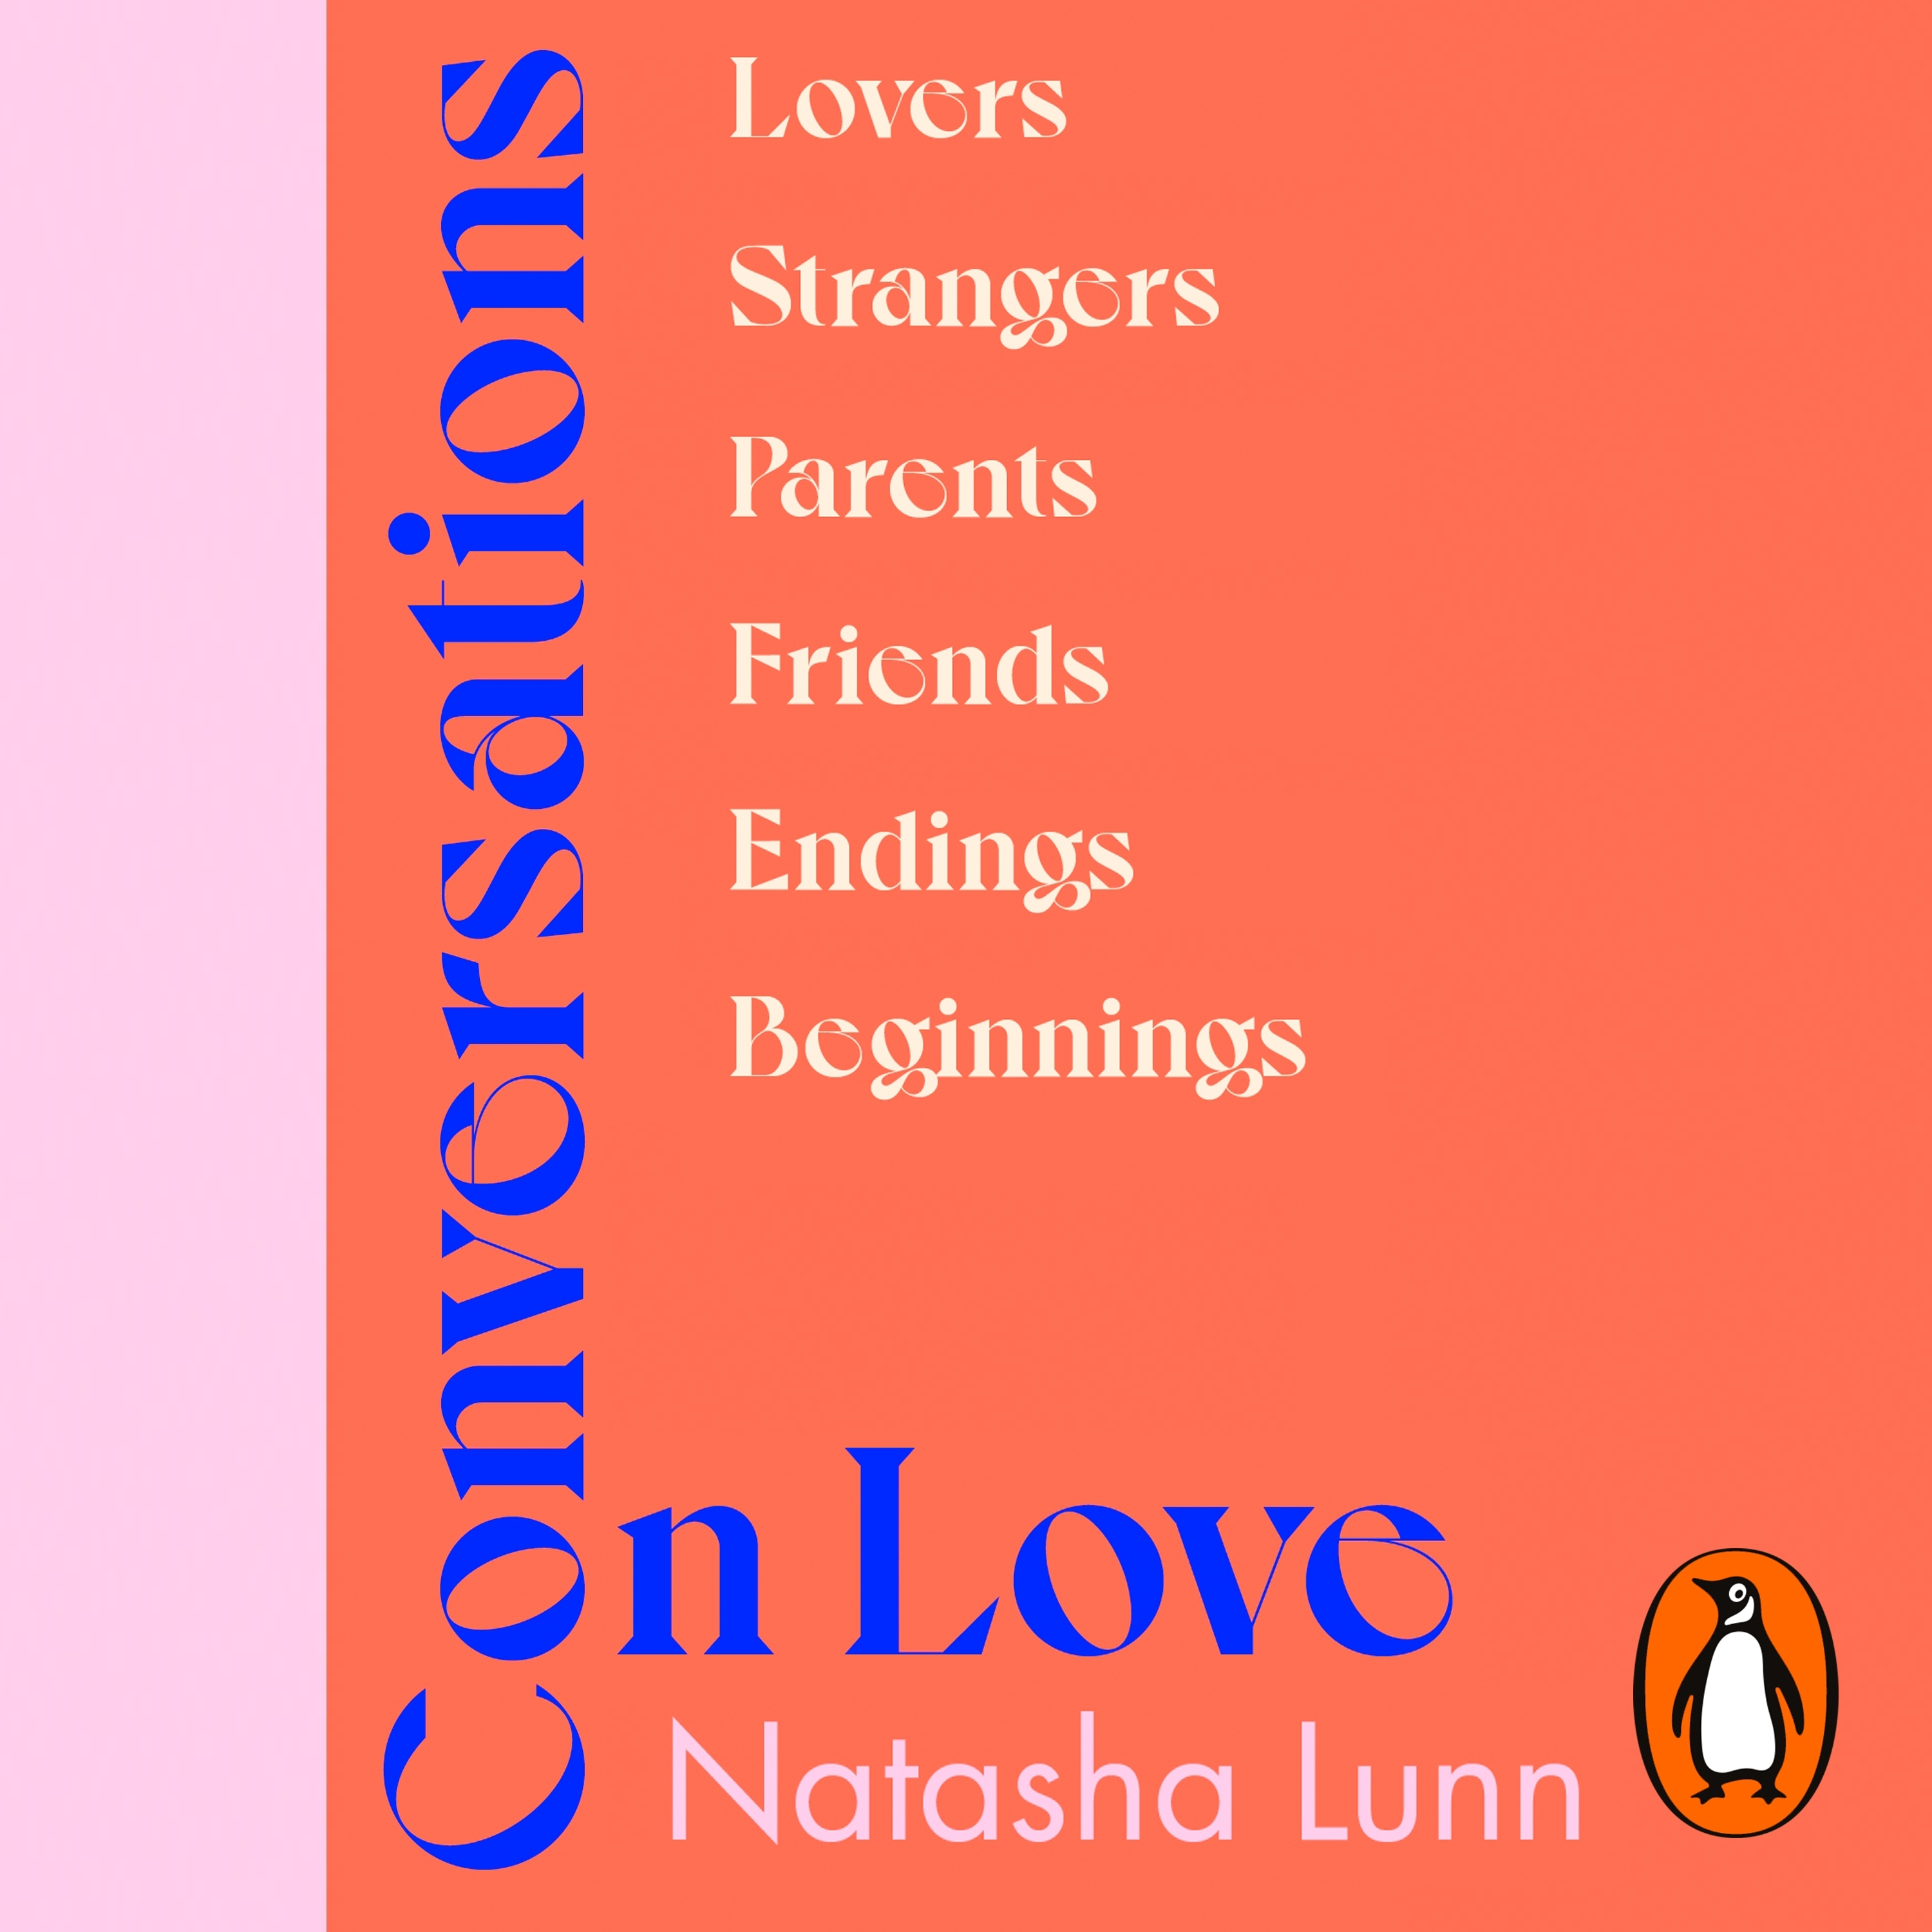 Conversations On Love By Natasha Lunn •